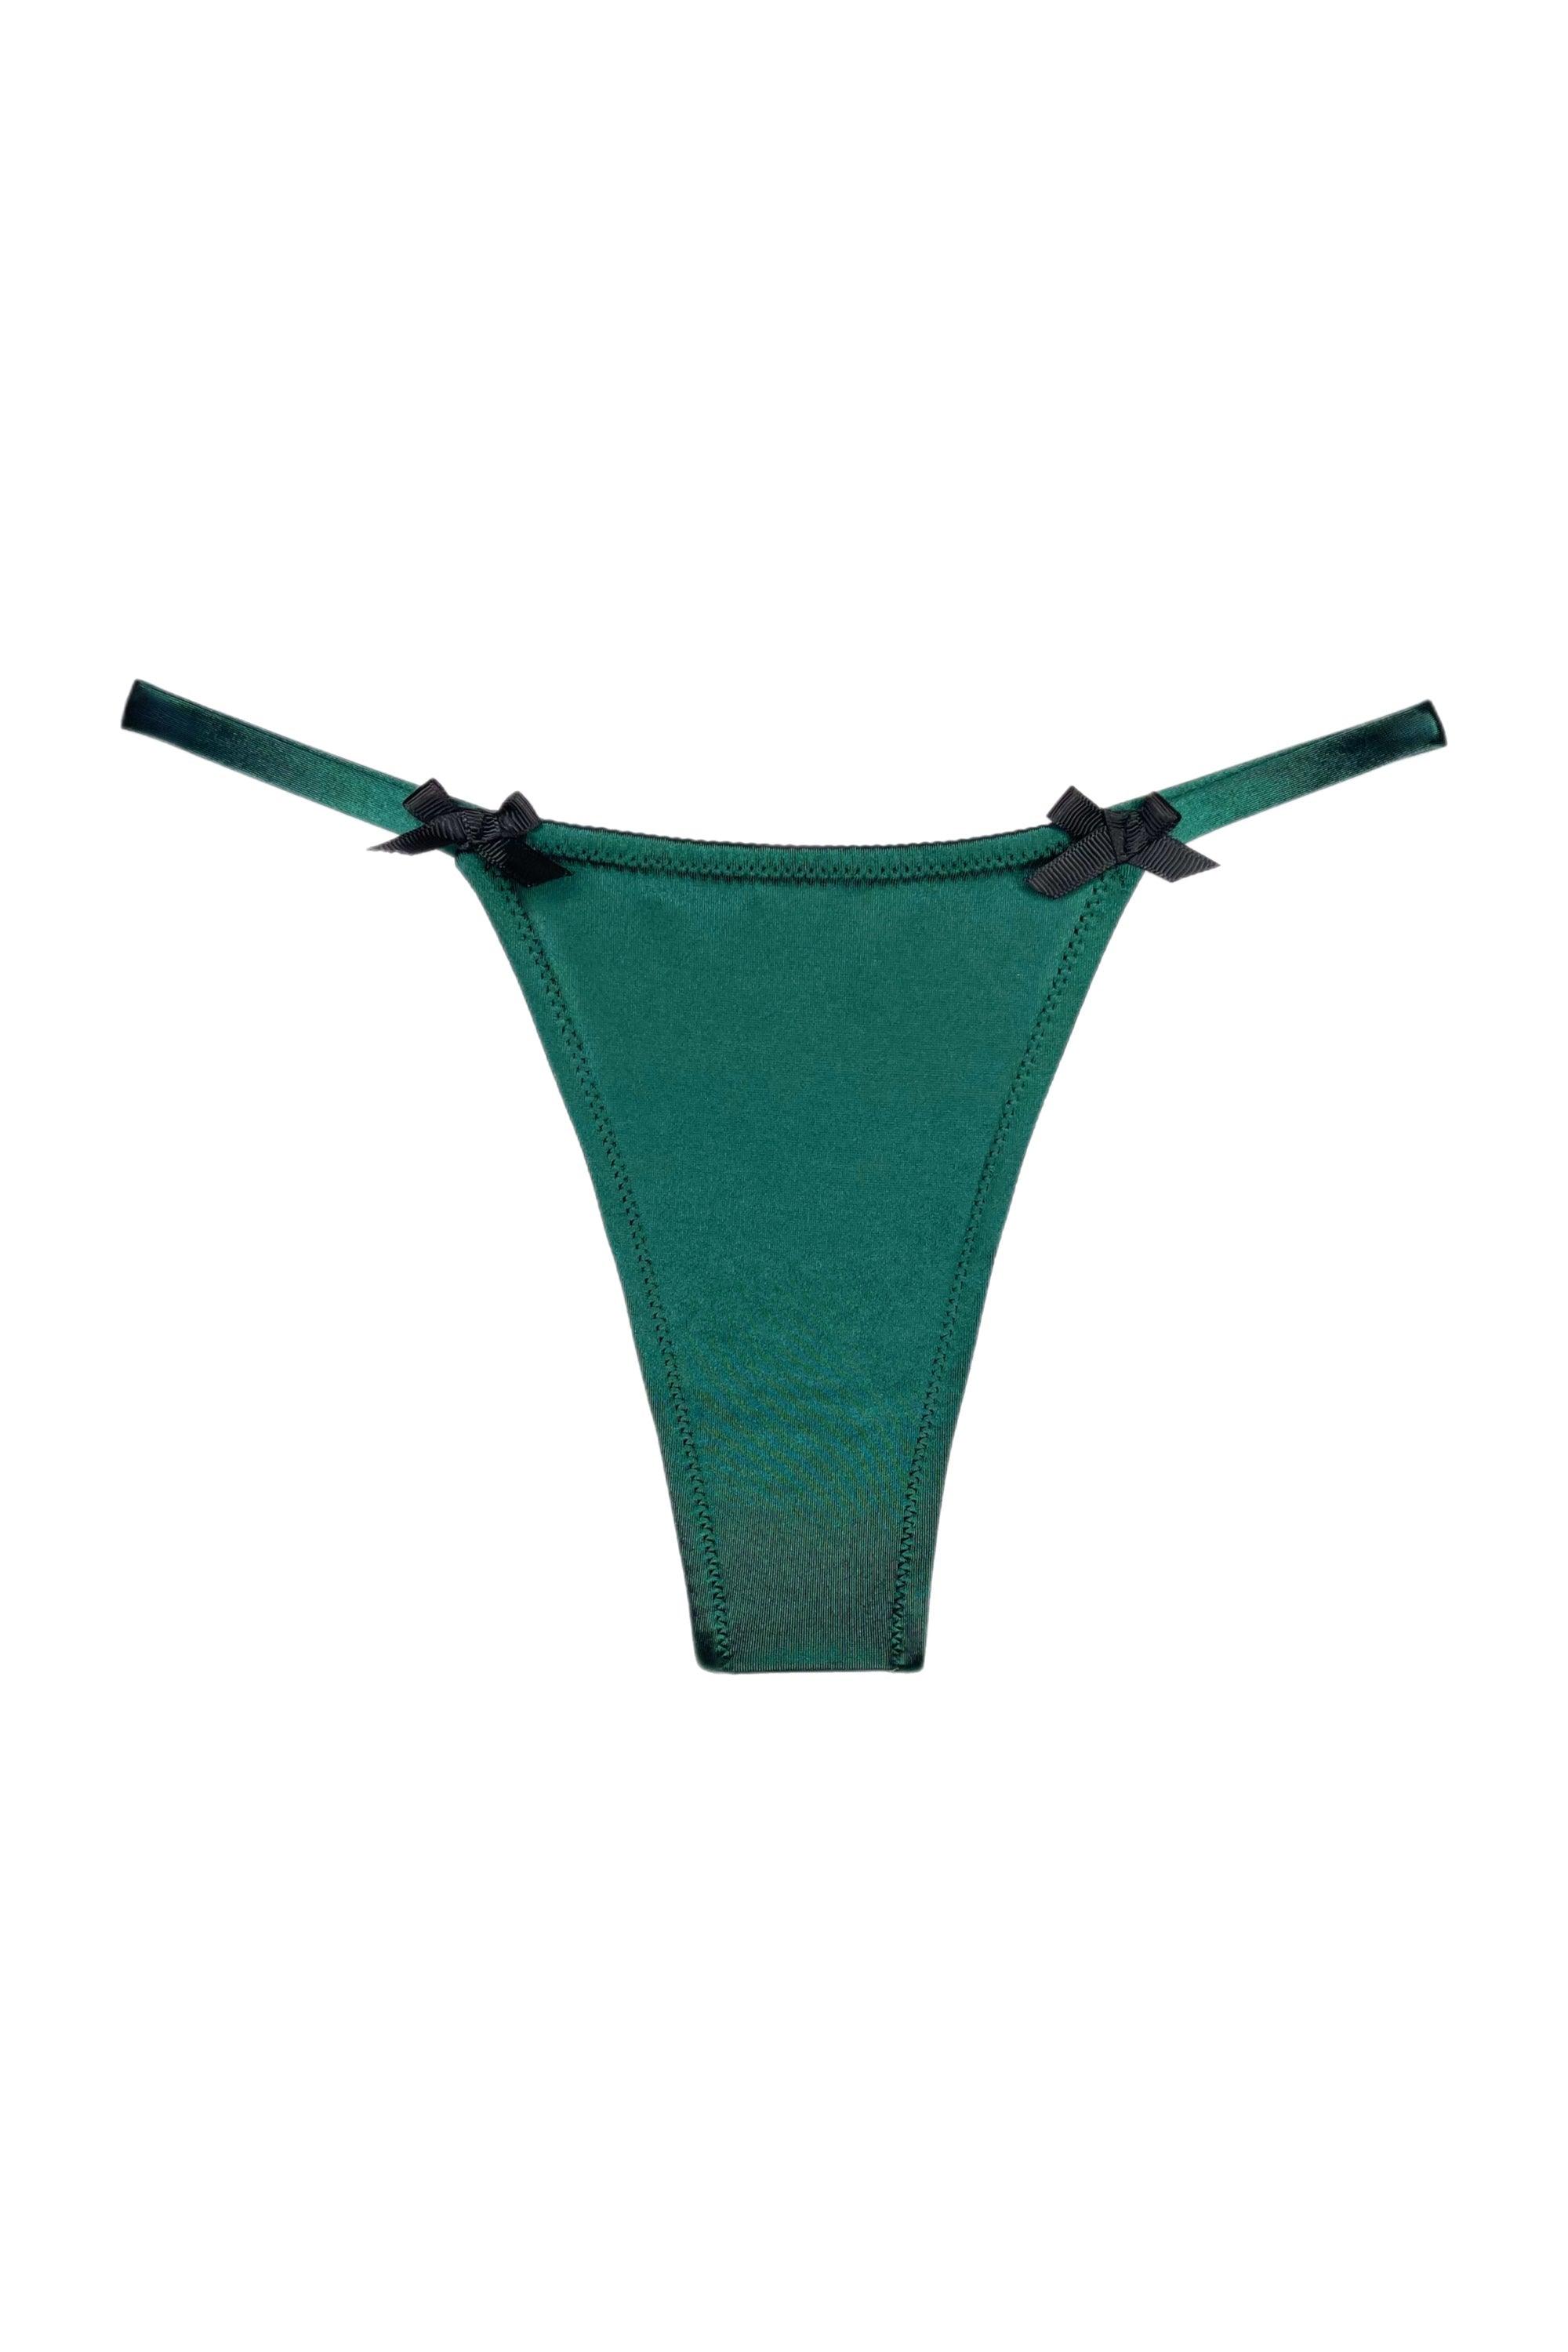 Joli Gloss emerald-black thongs - yesUndress